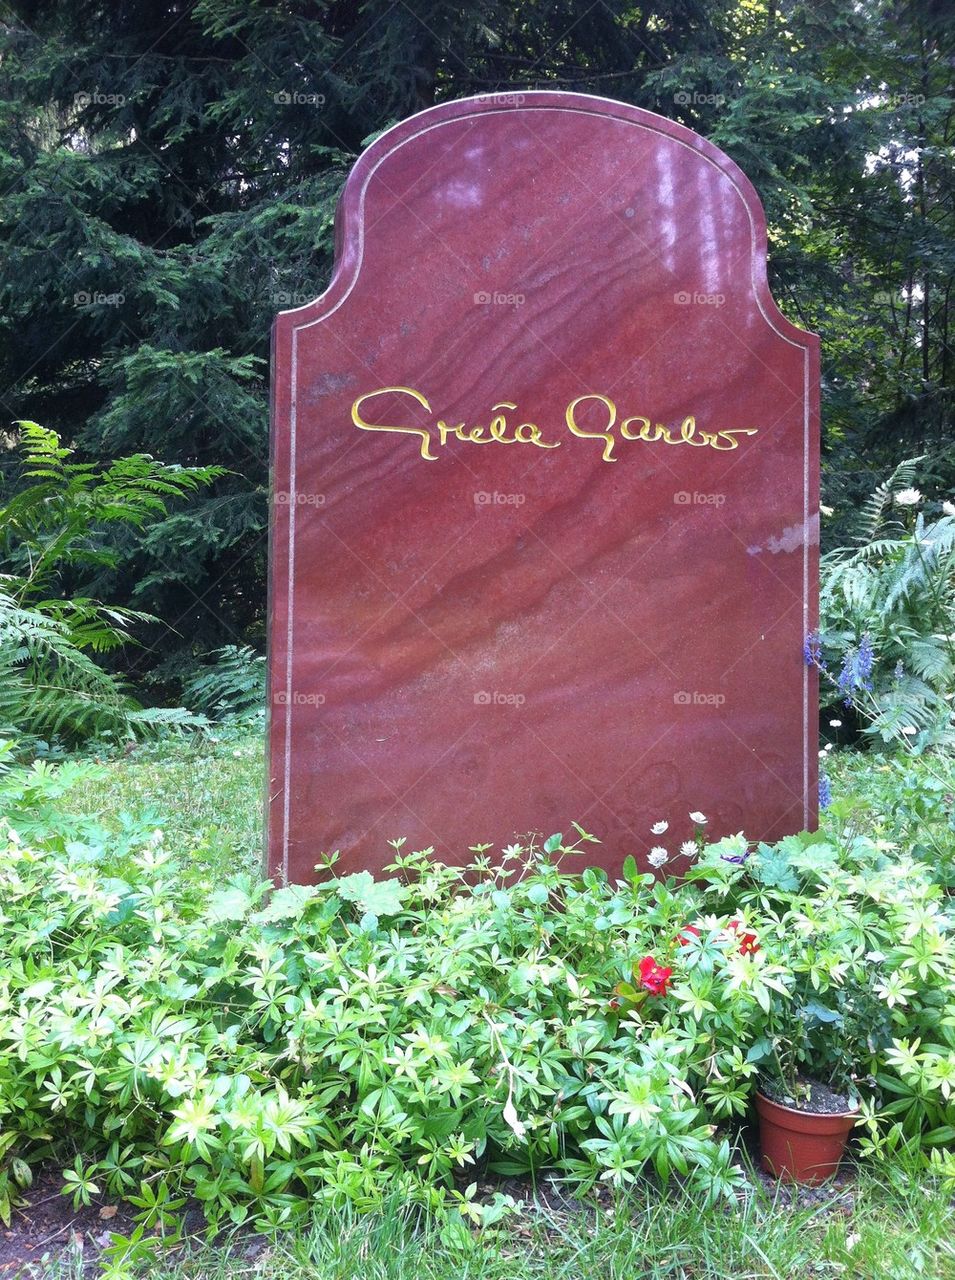 Greta Garbo grave at the UNESCO cemetery of Skogskyrkogården,